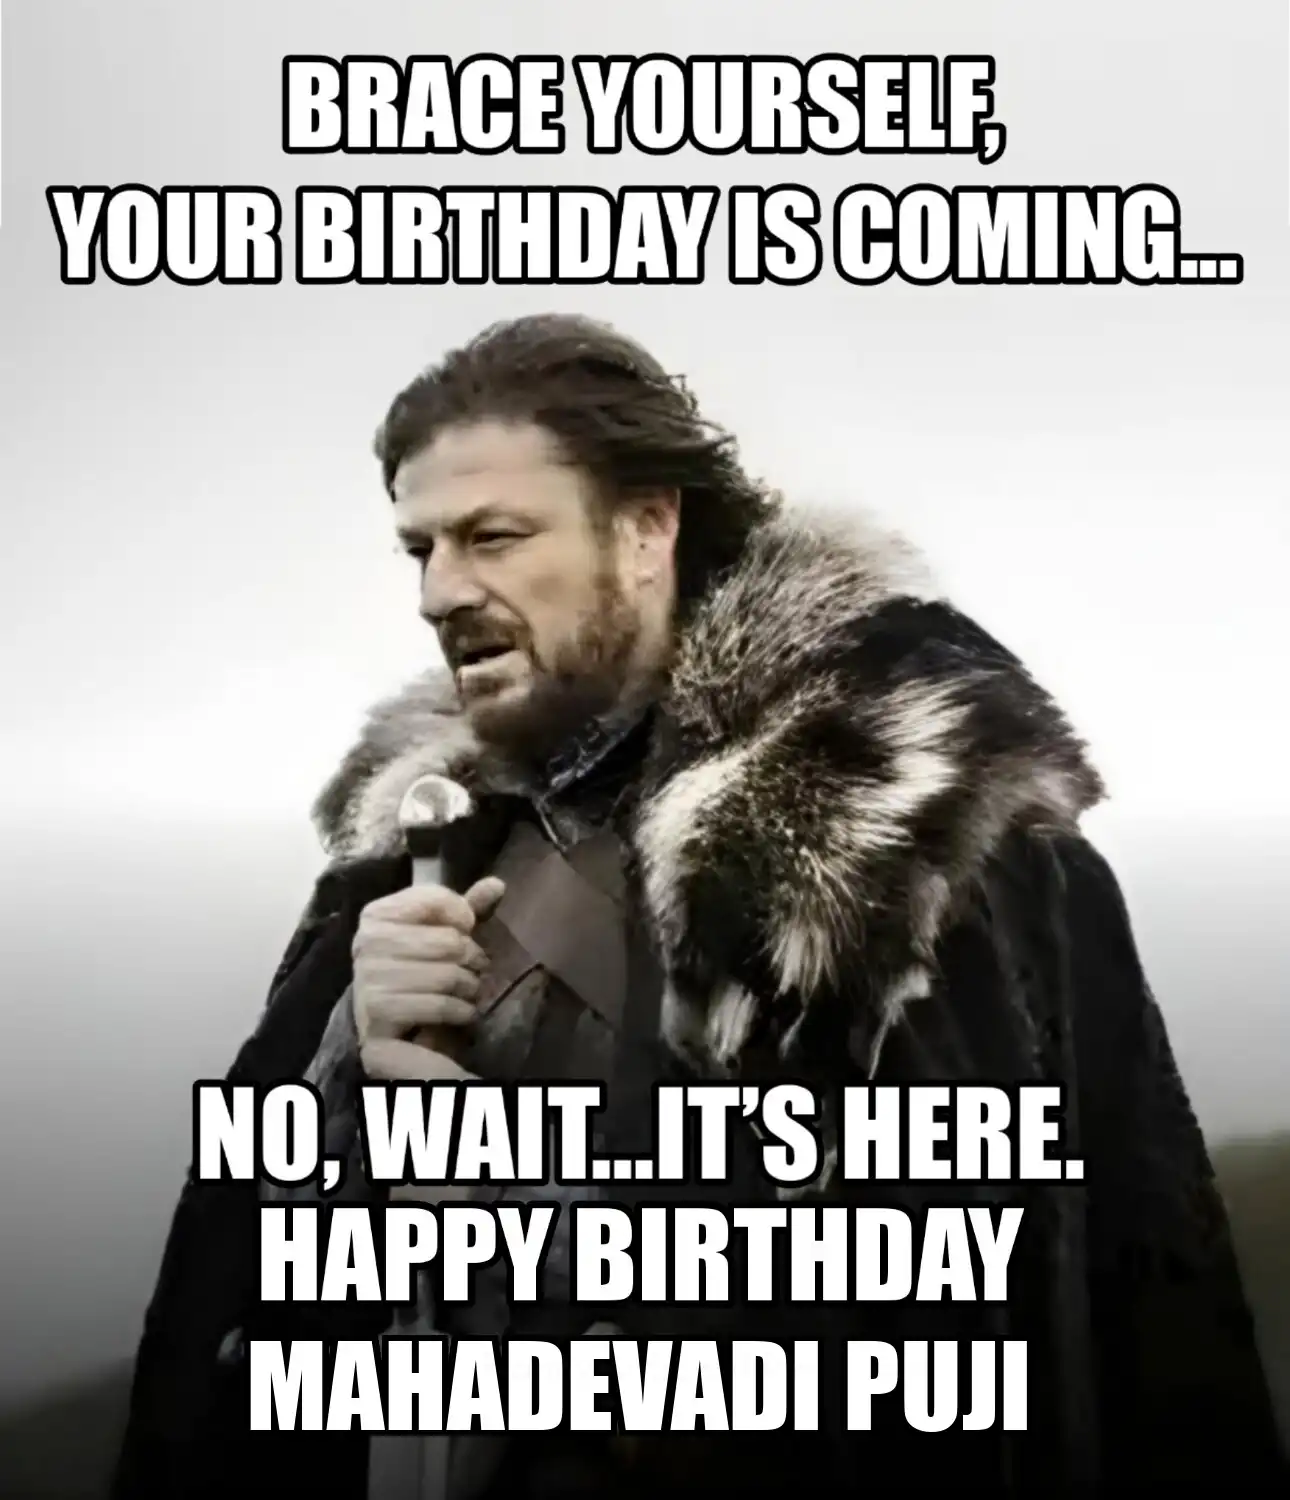 Happy Birthday Mahadevadi Puji Brace Yourself Your Birthday Is Coming Meme